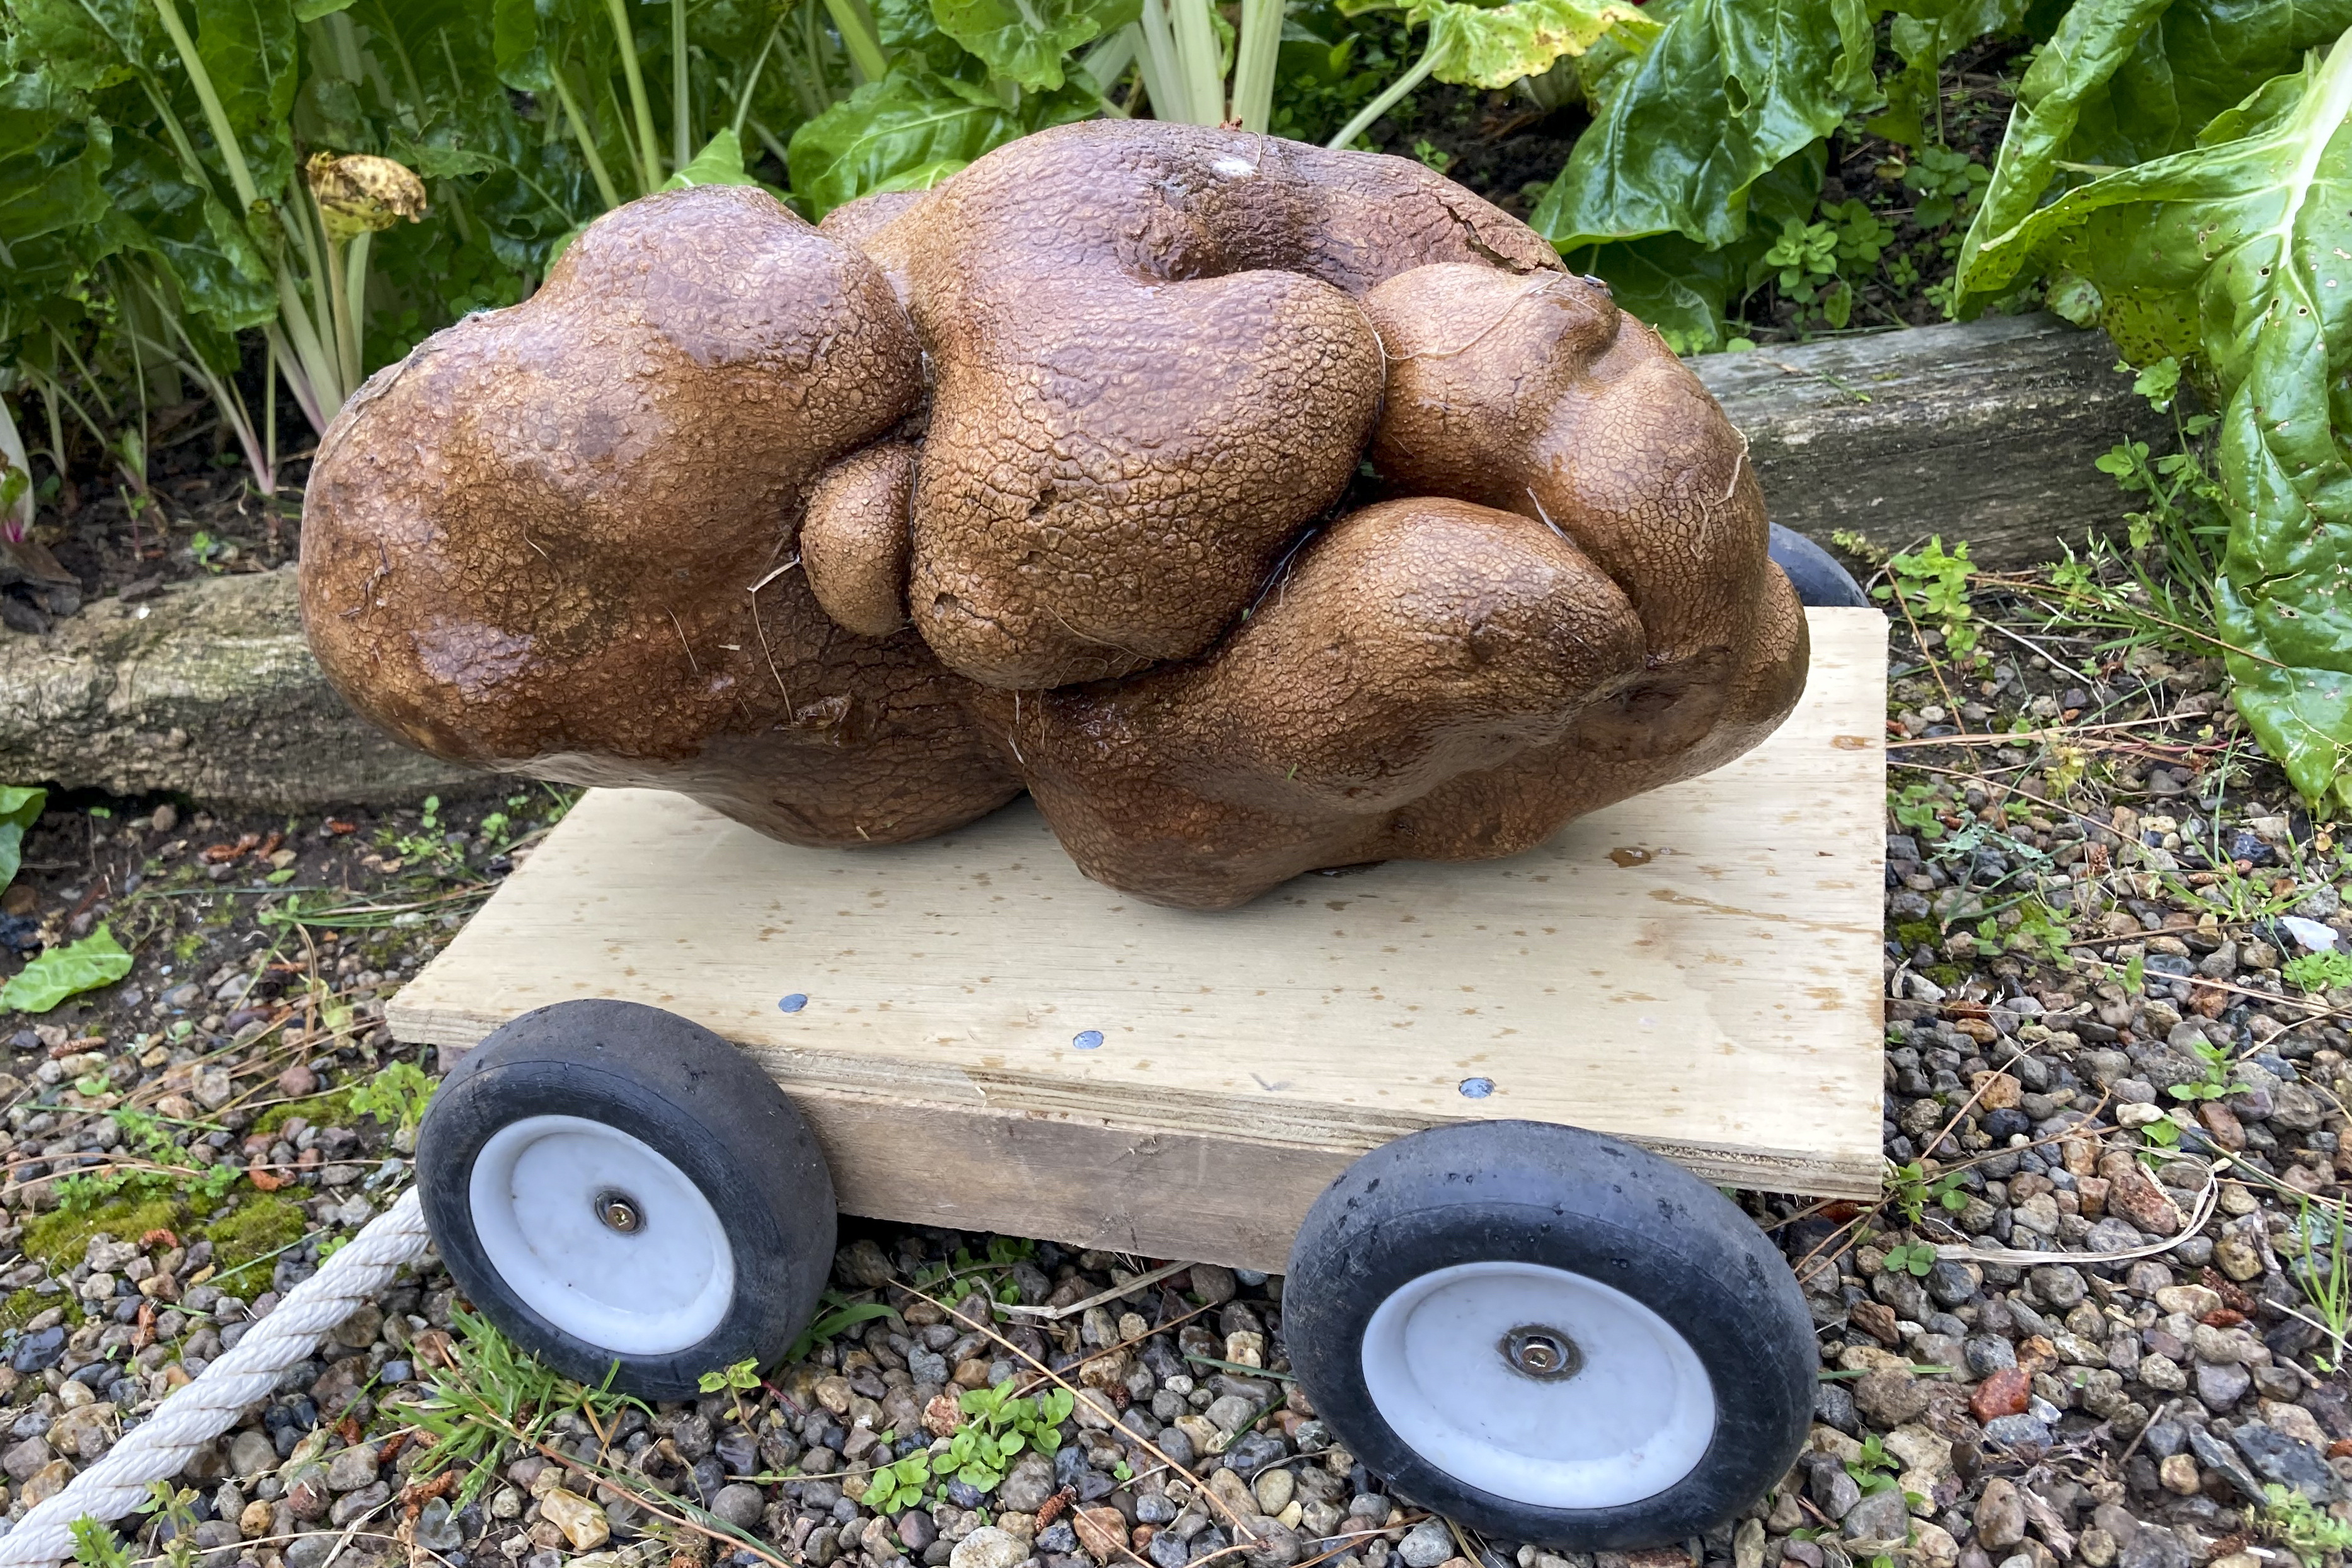 worlds biggest potato